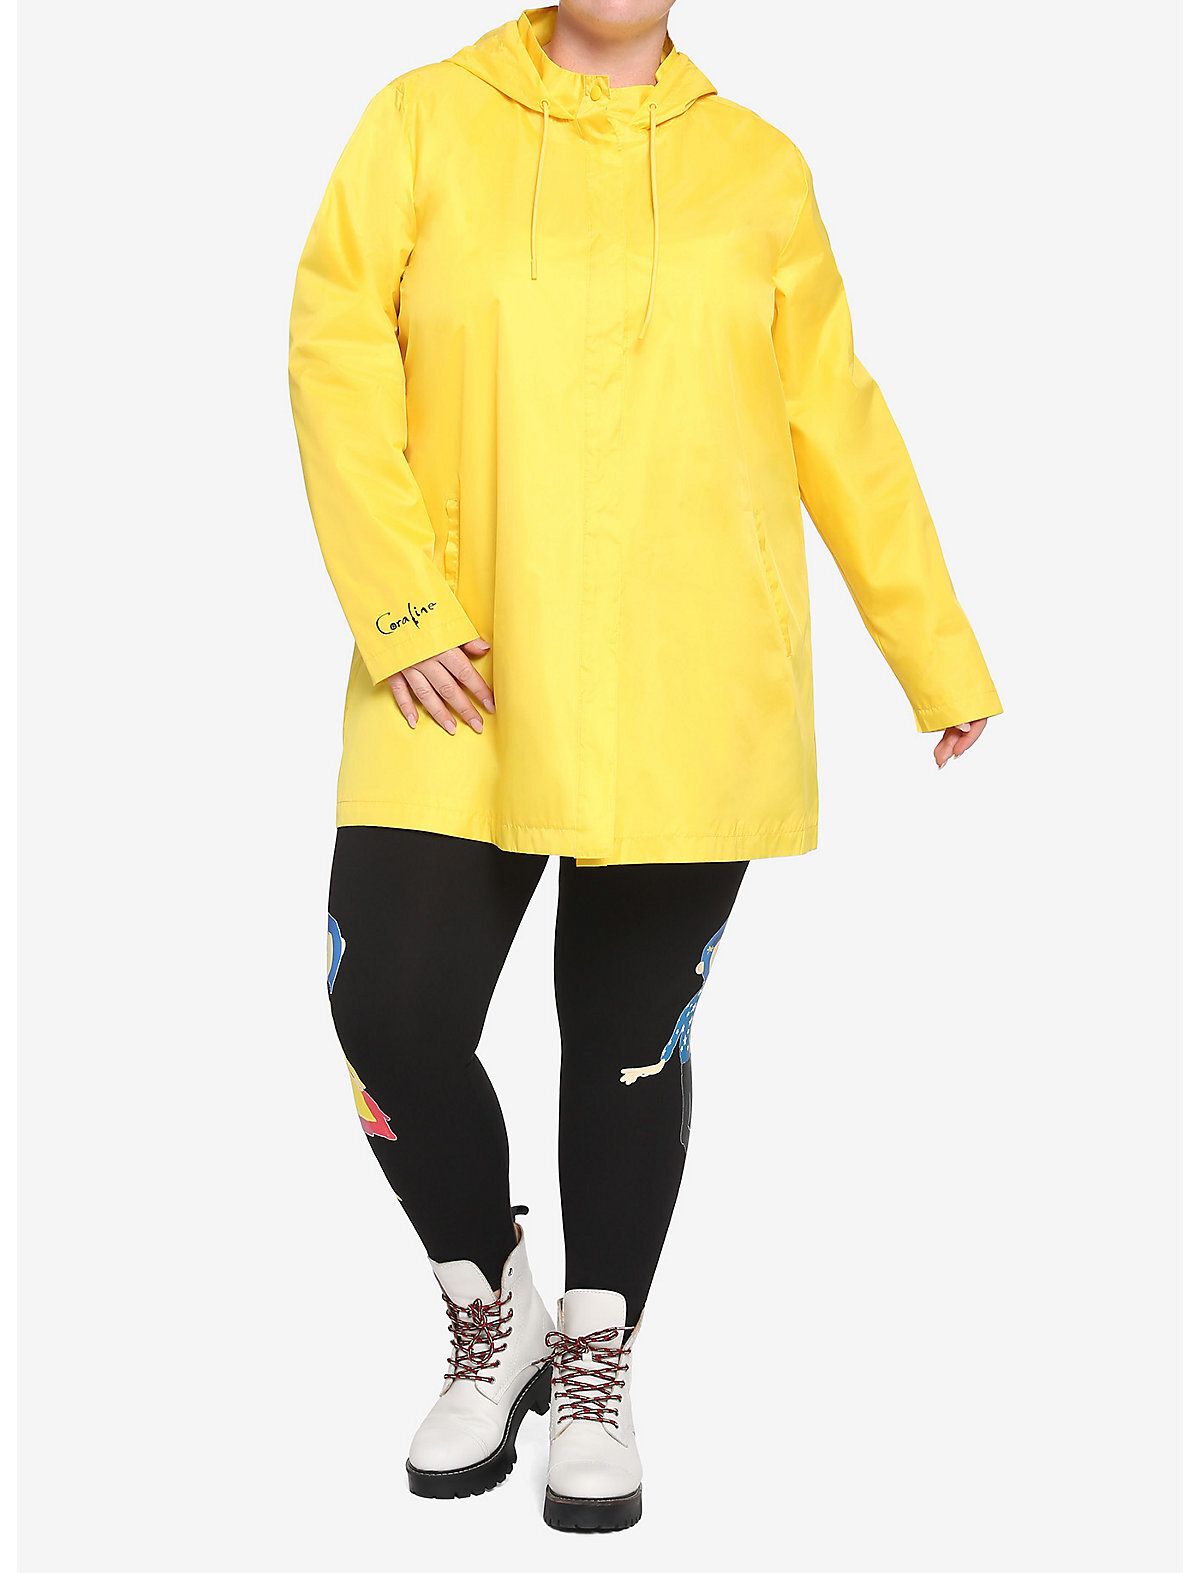 Coraline Yellow Raincoat Plus Size